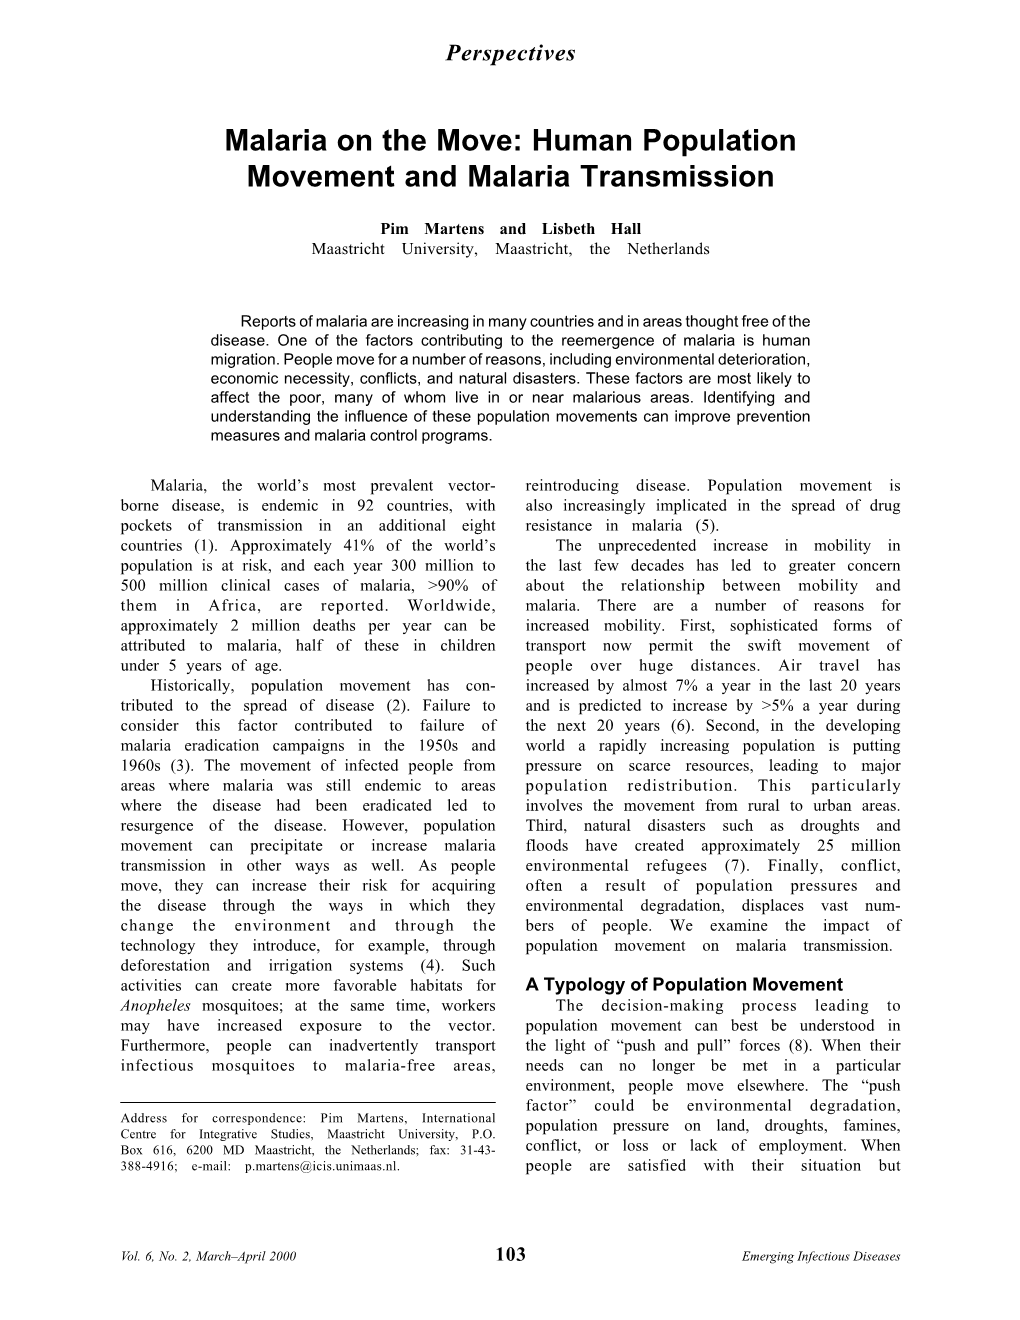 Human Population Movement and Malaria Transmission